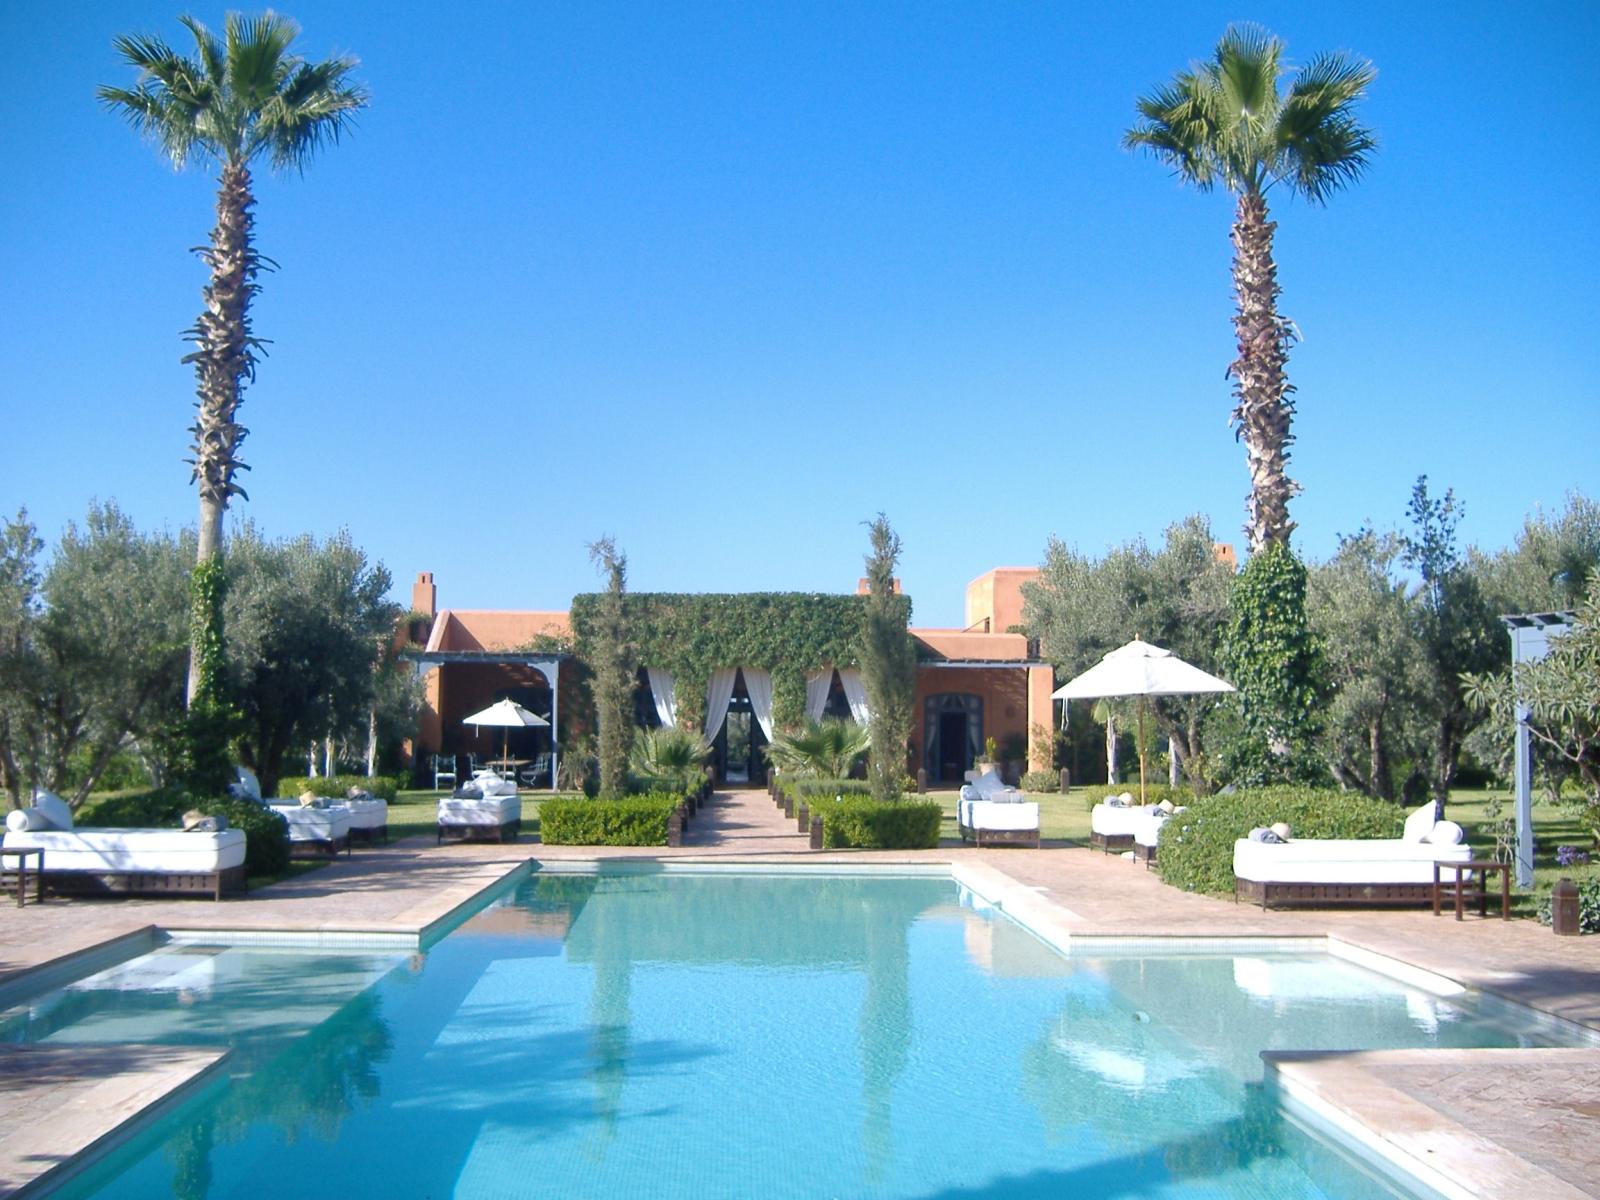 The pool at Dar Arbala in Morocco